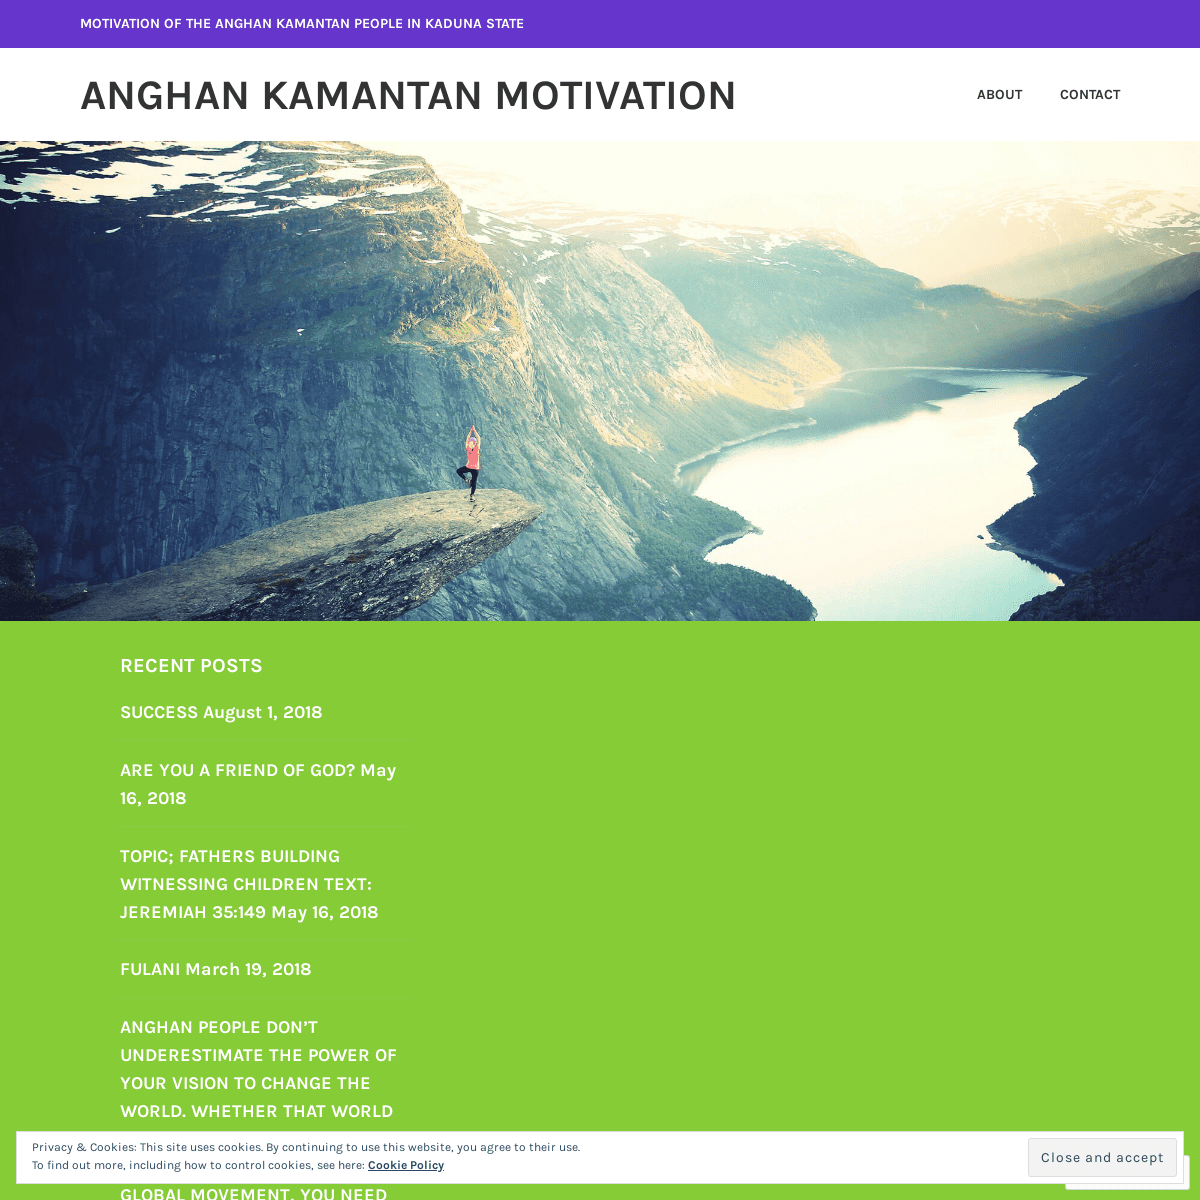 Anghan kamantan motivation – motivation of the Anghan kamantan people in Kaduna state